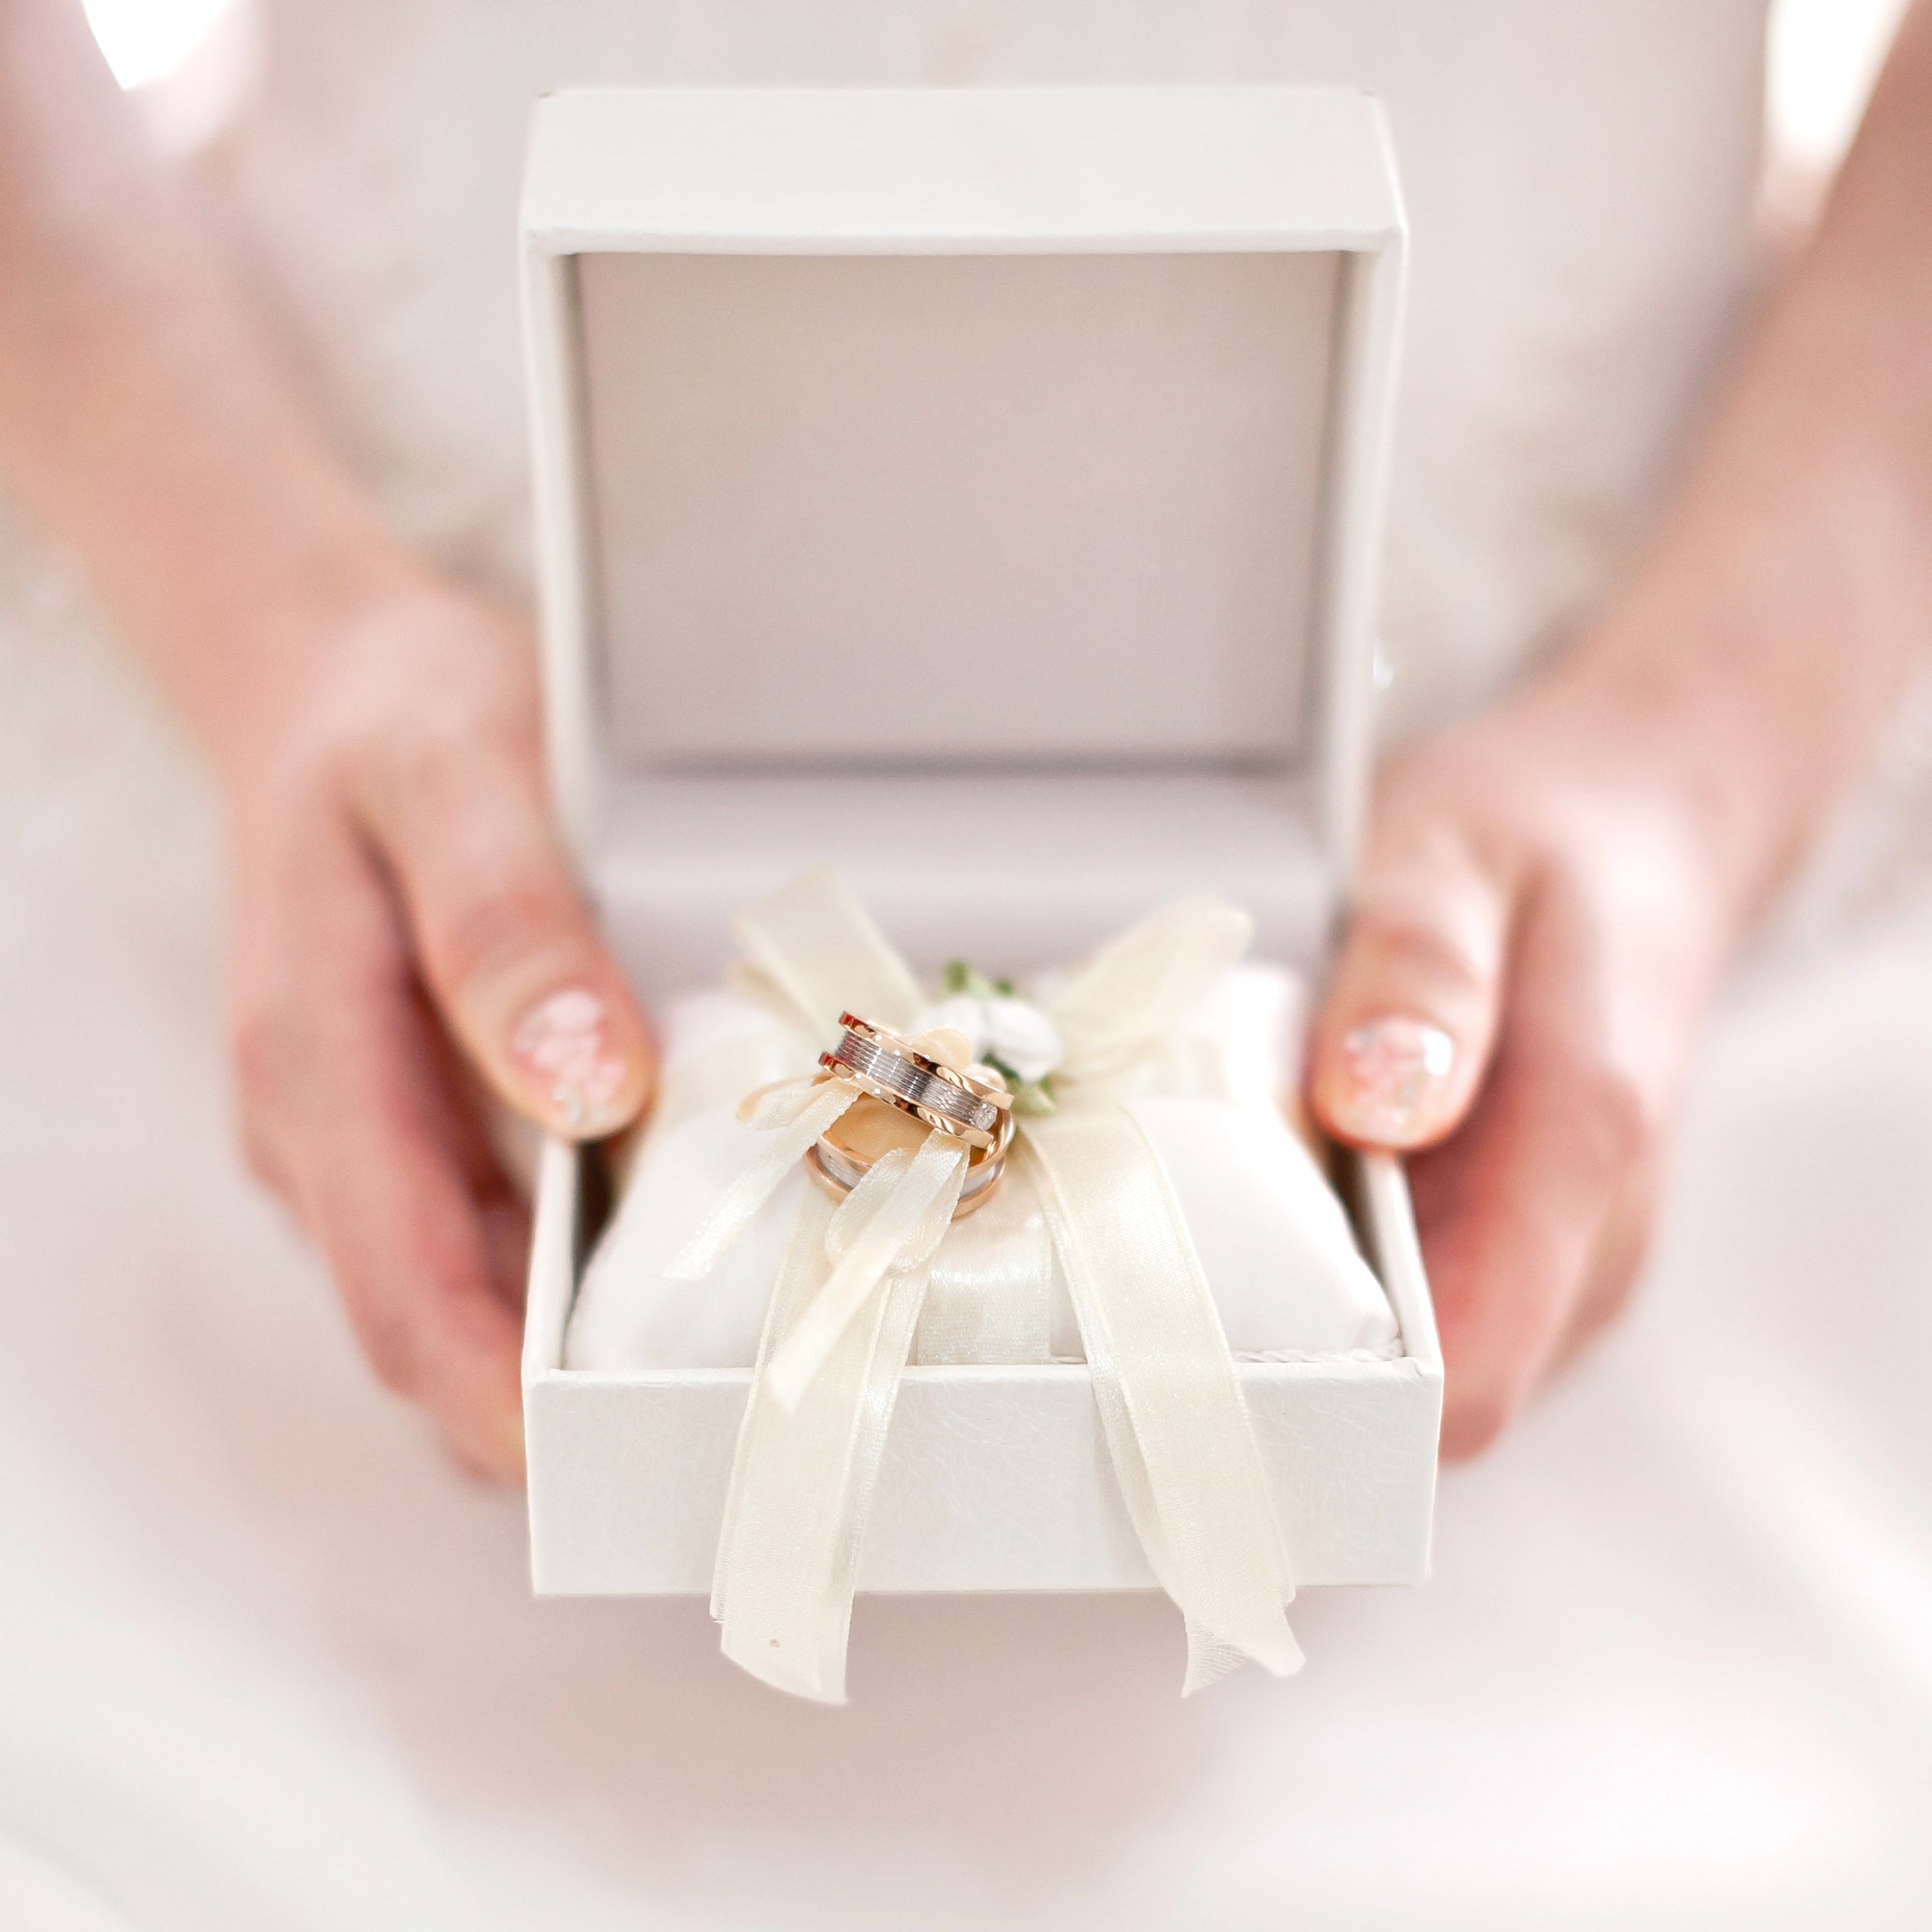 close-up-female-hand-holding-wedding-rings-box.jpg